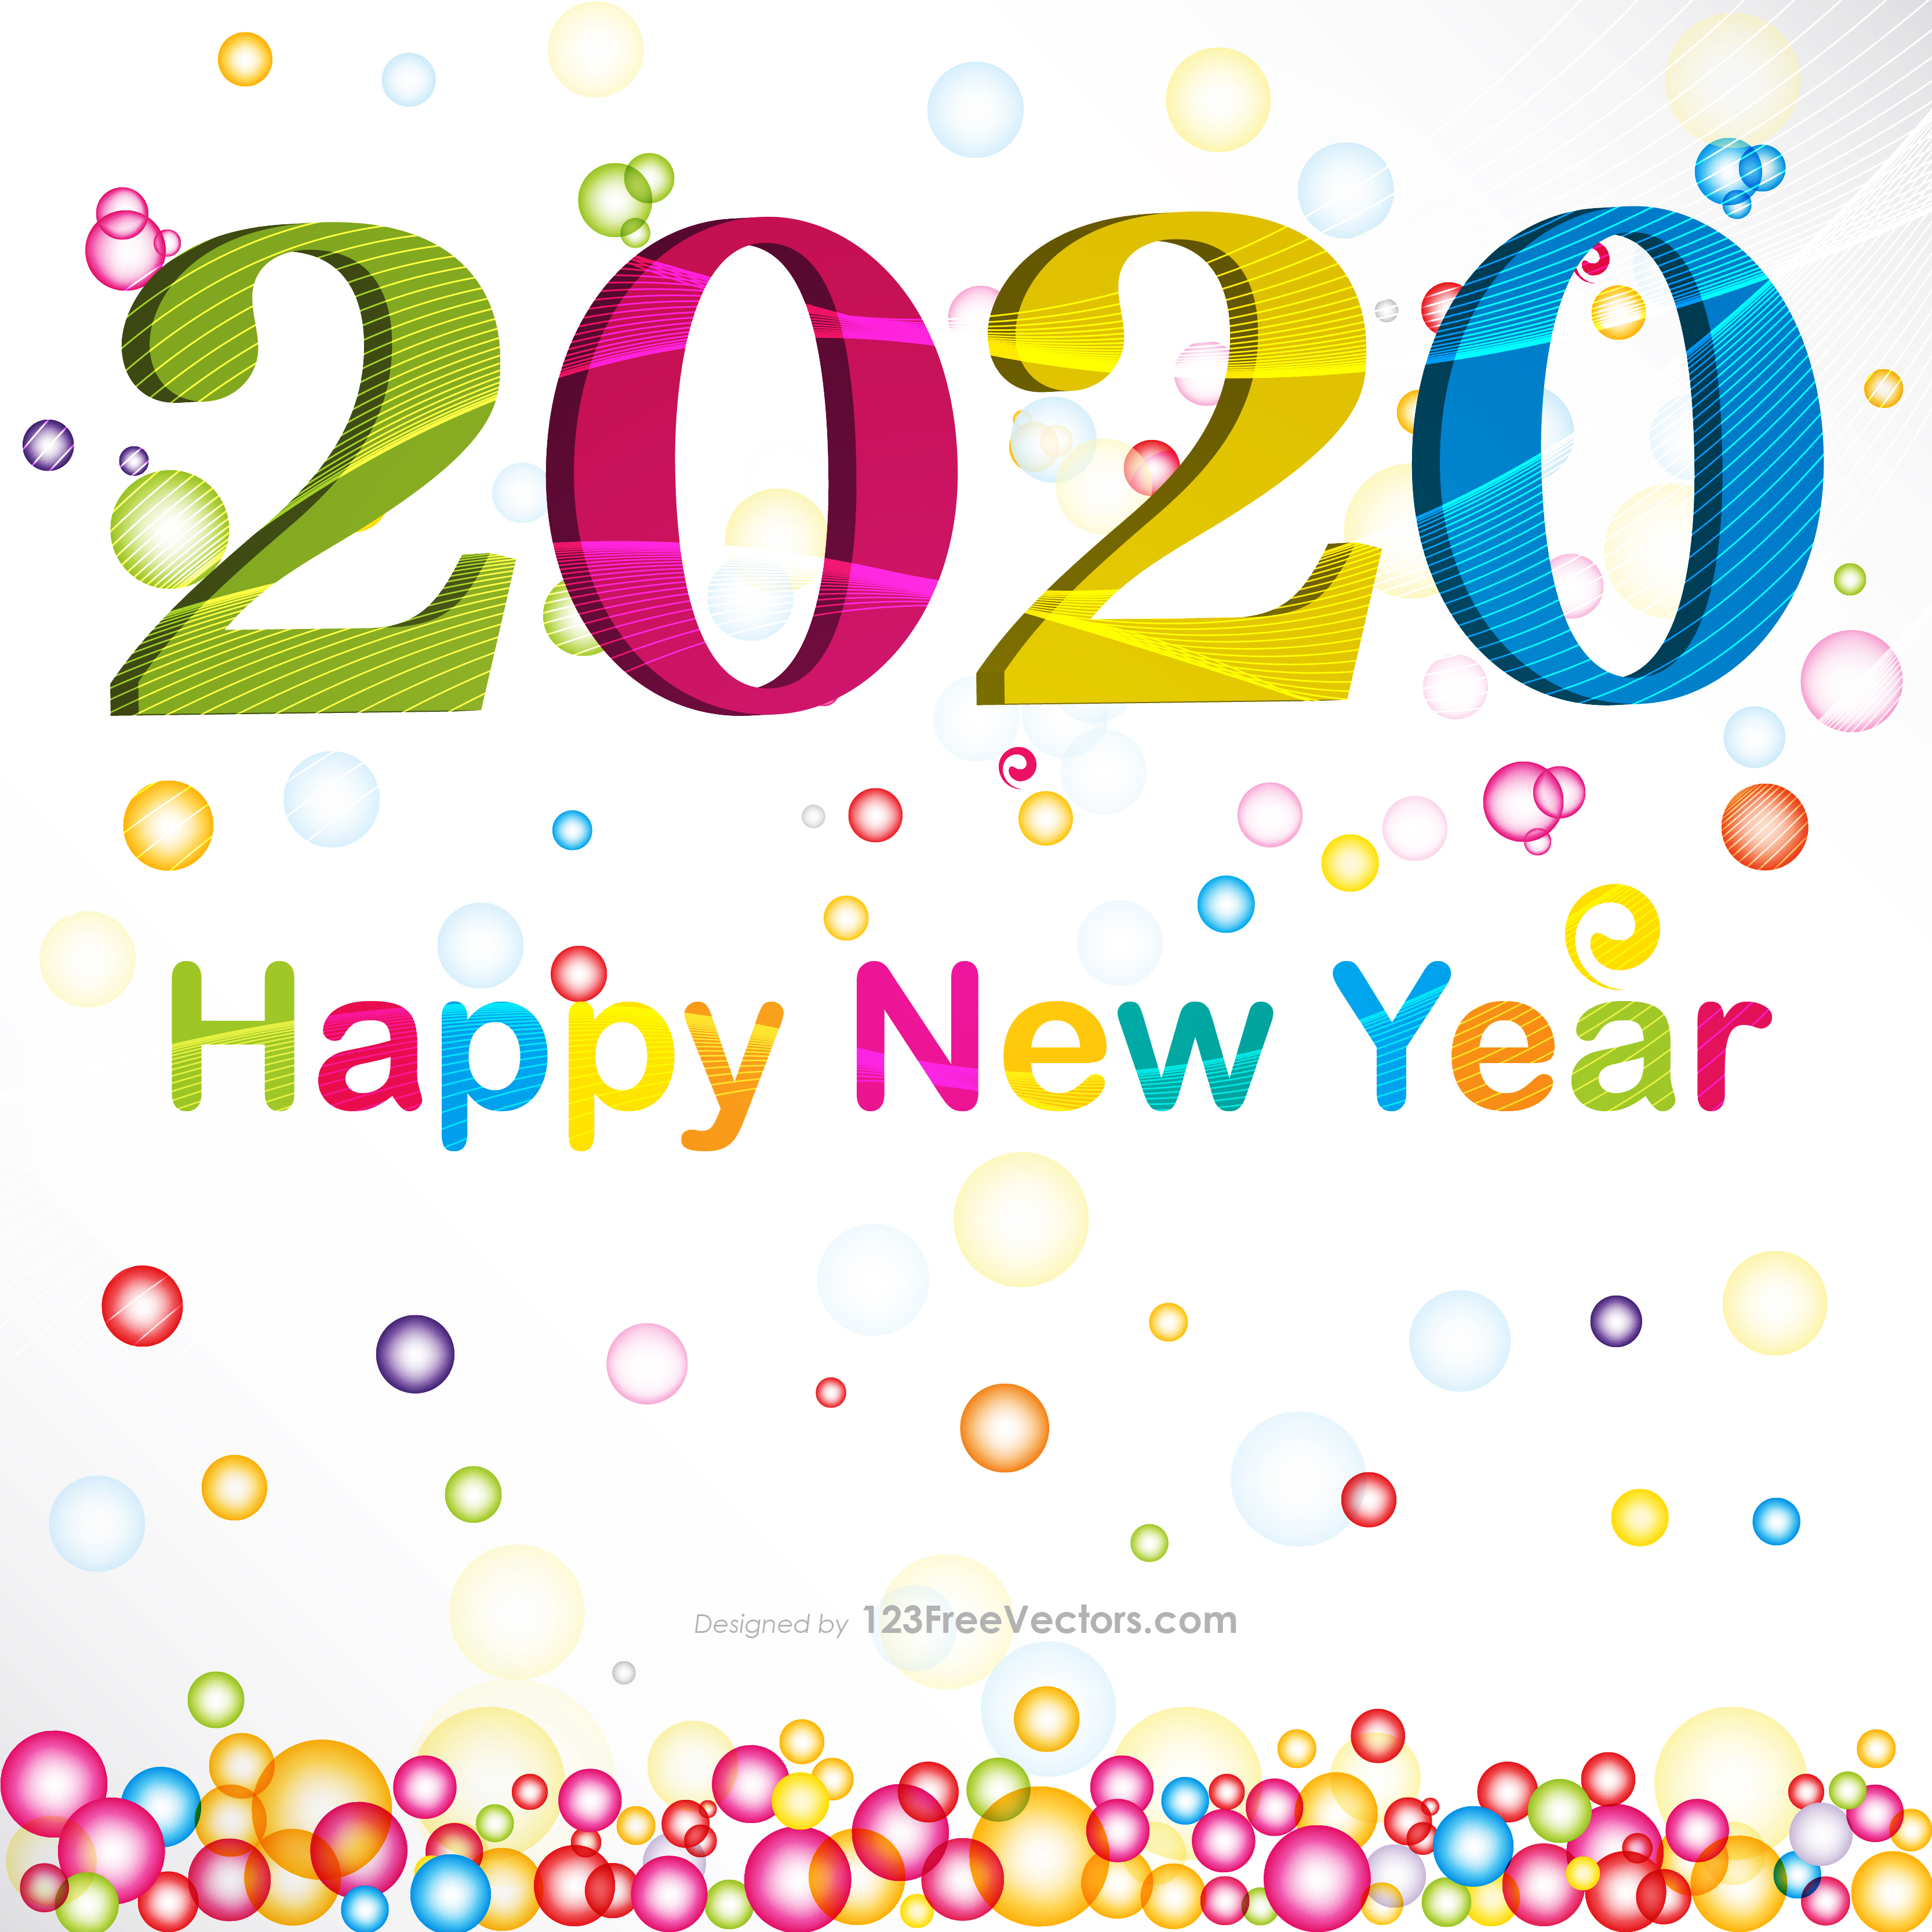 Free New Year Card Design 2020